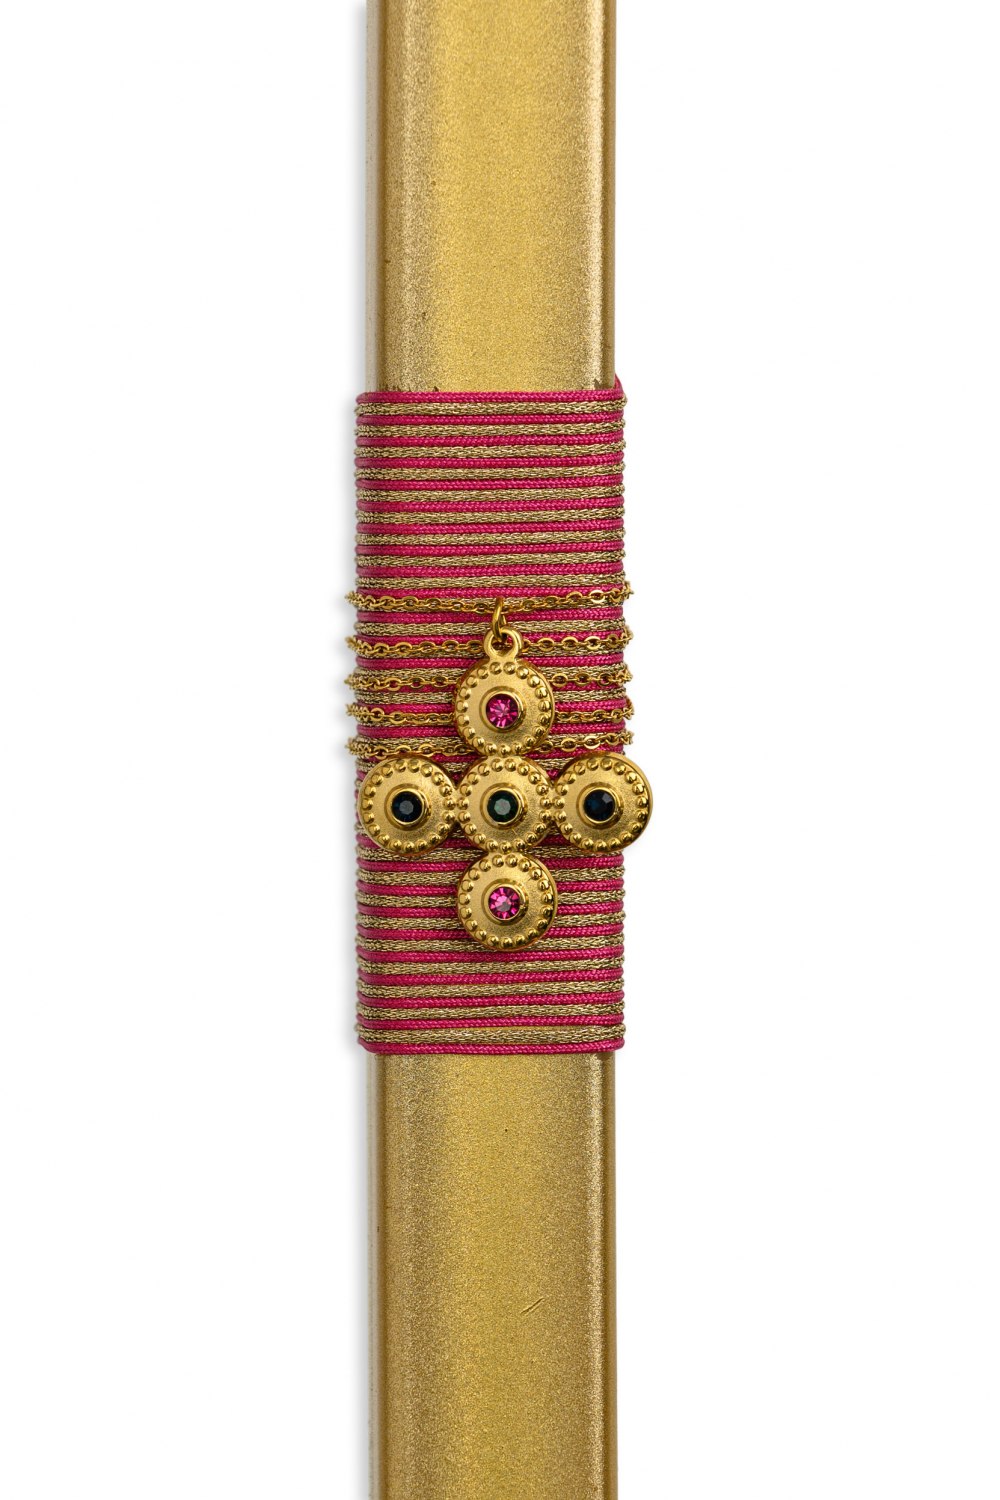 KESSARIS - Multicolour Cross Handmade Easter Gold Candle